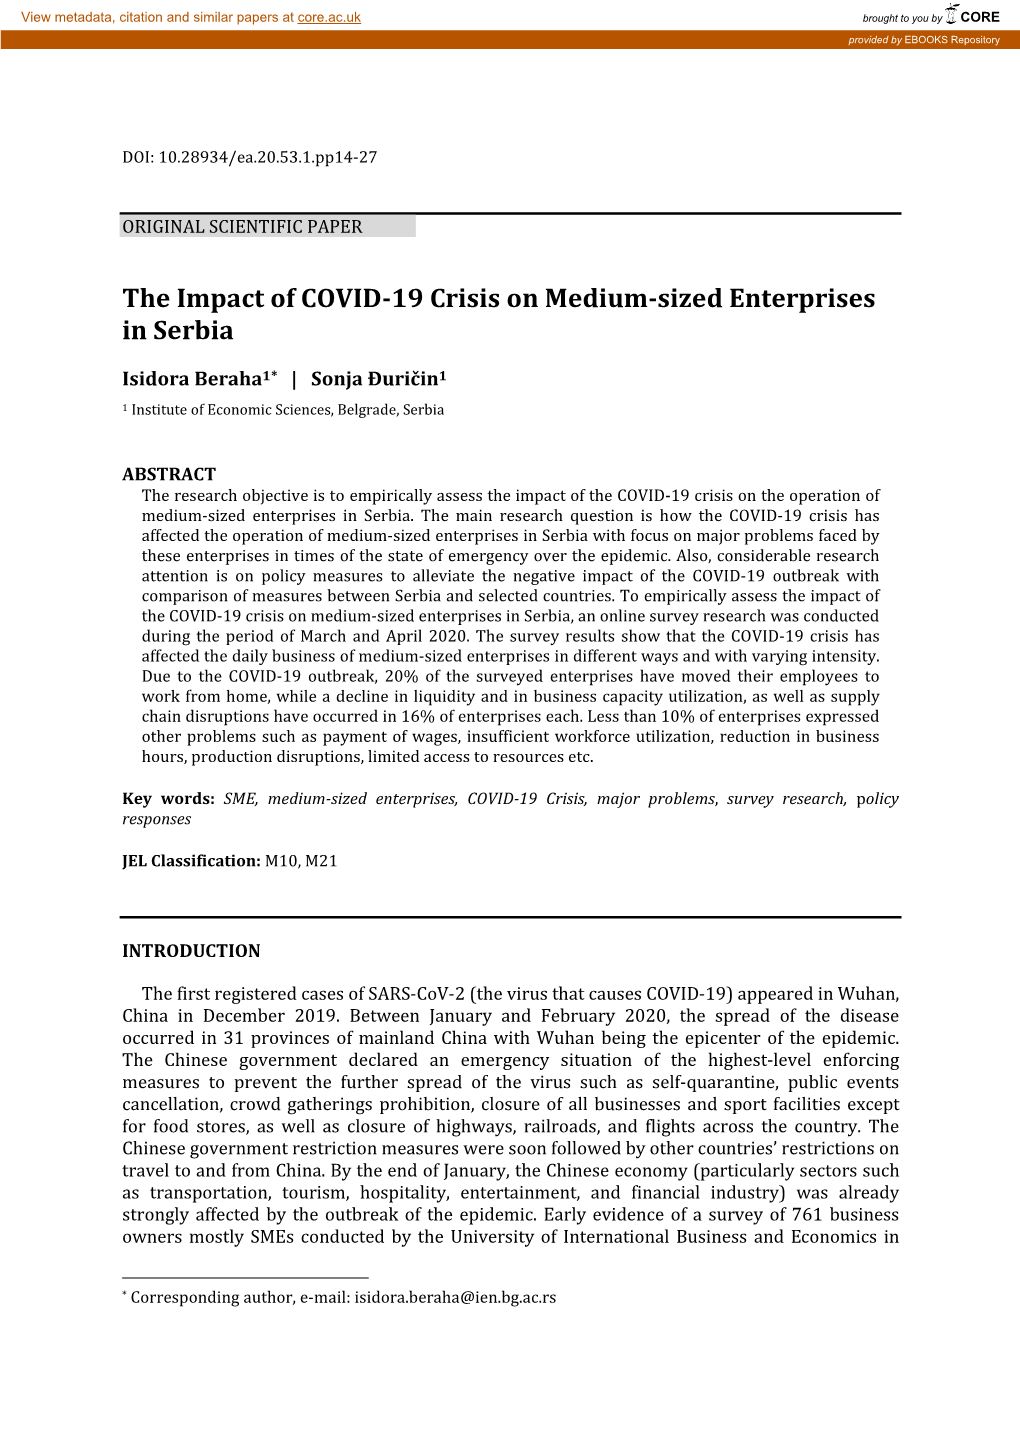 The Impact of COVID-19 Crisis on Medium-Sized Enterprises in Serbia